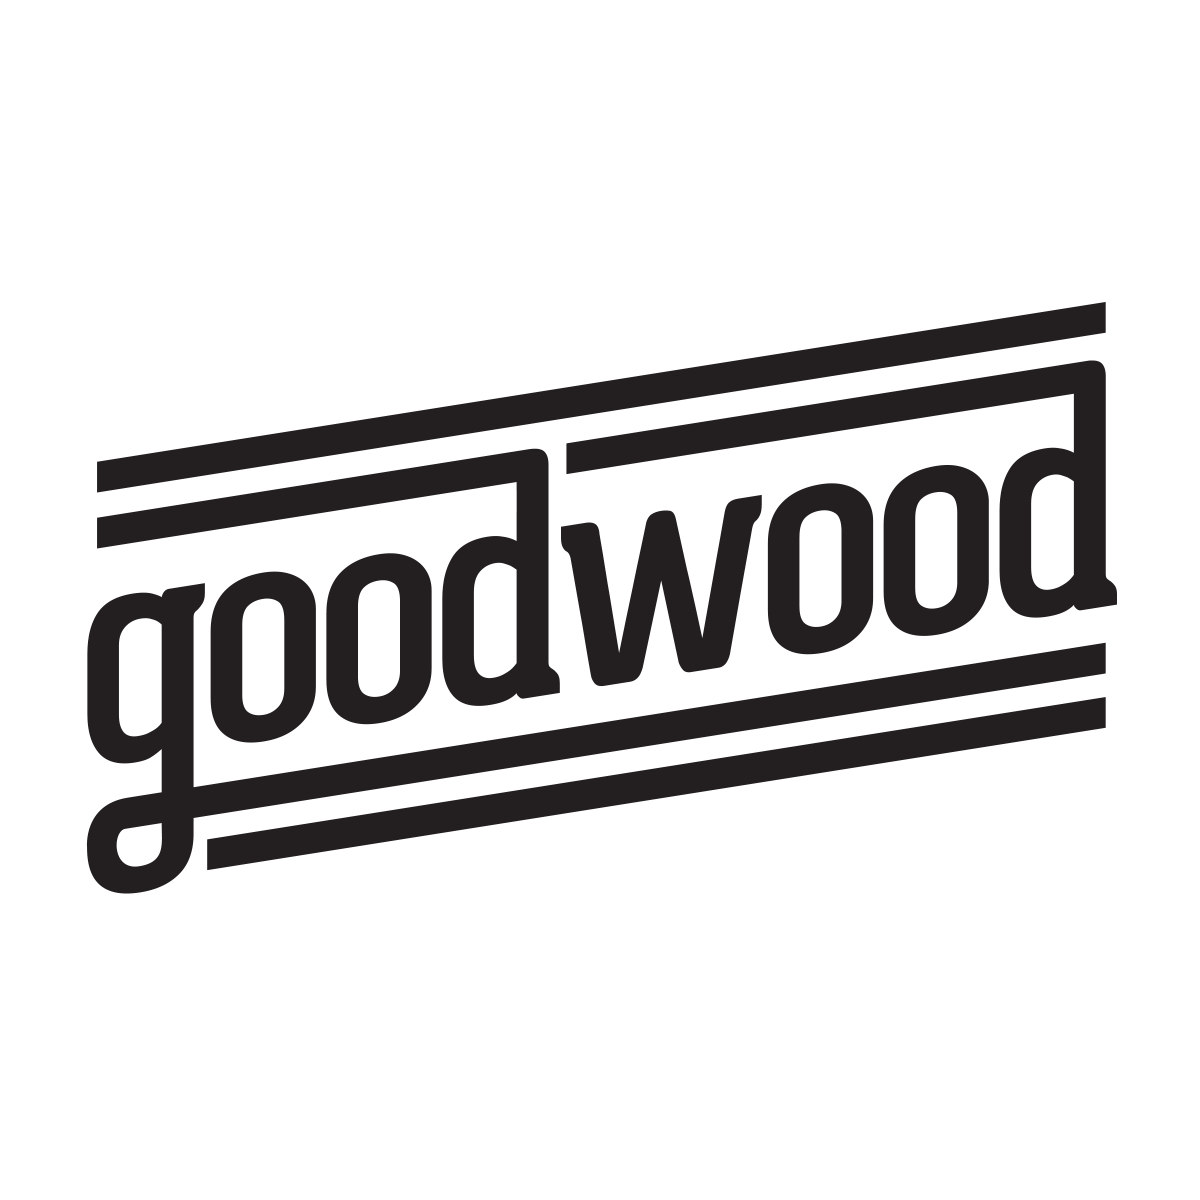 Goodwood Brewing